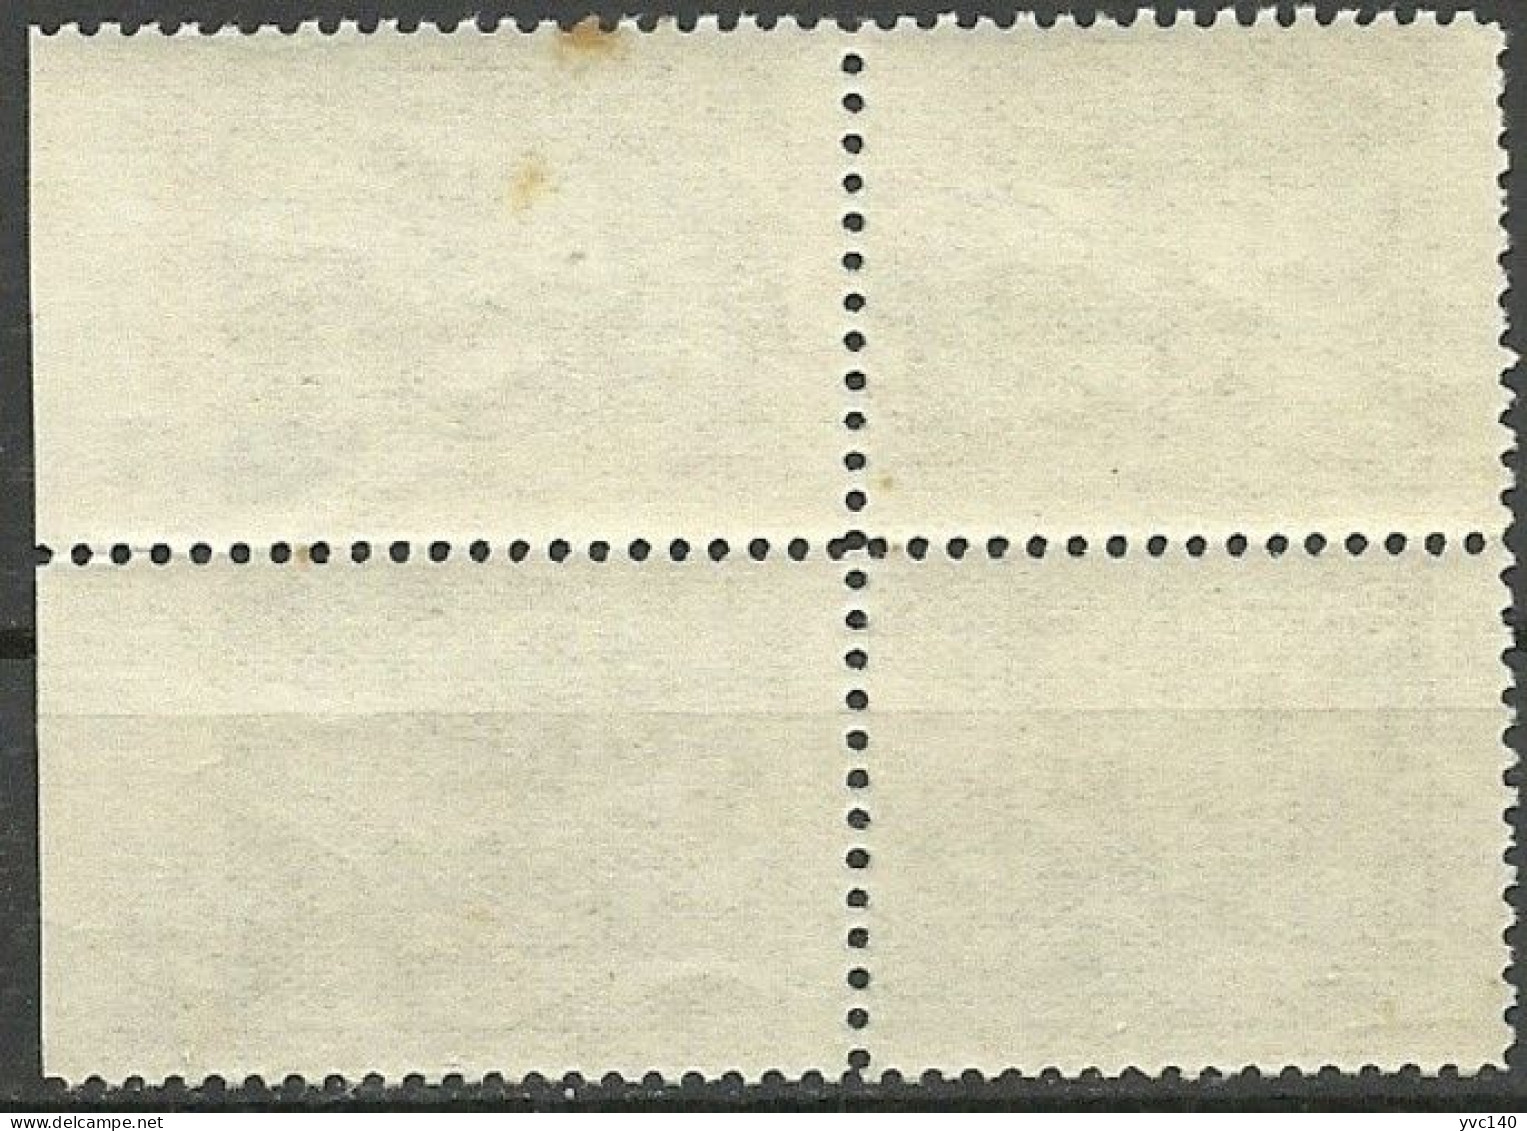 Turkey; 1959 Pictorial Postage Stamp 1 K. ERROR "Imperf. Edge" - Nuevos